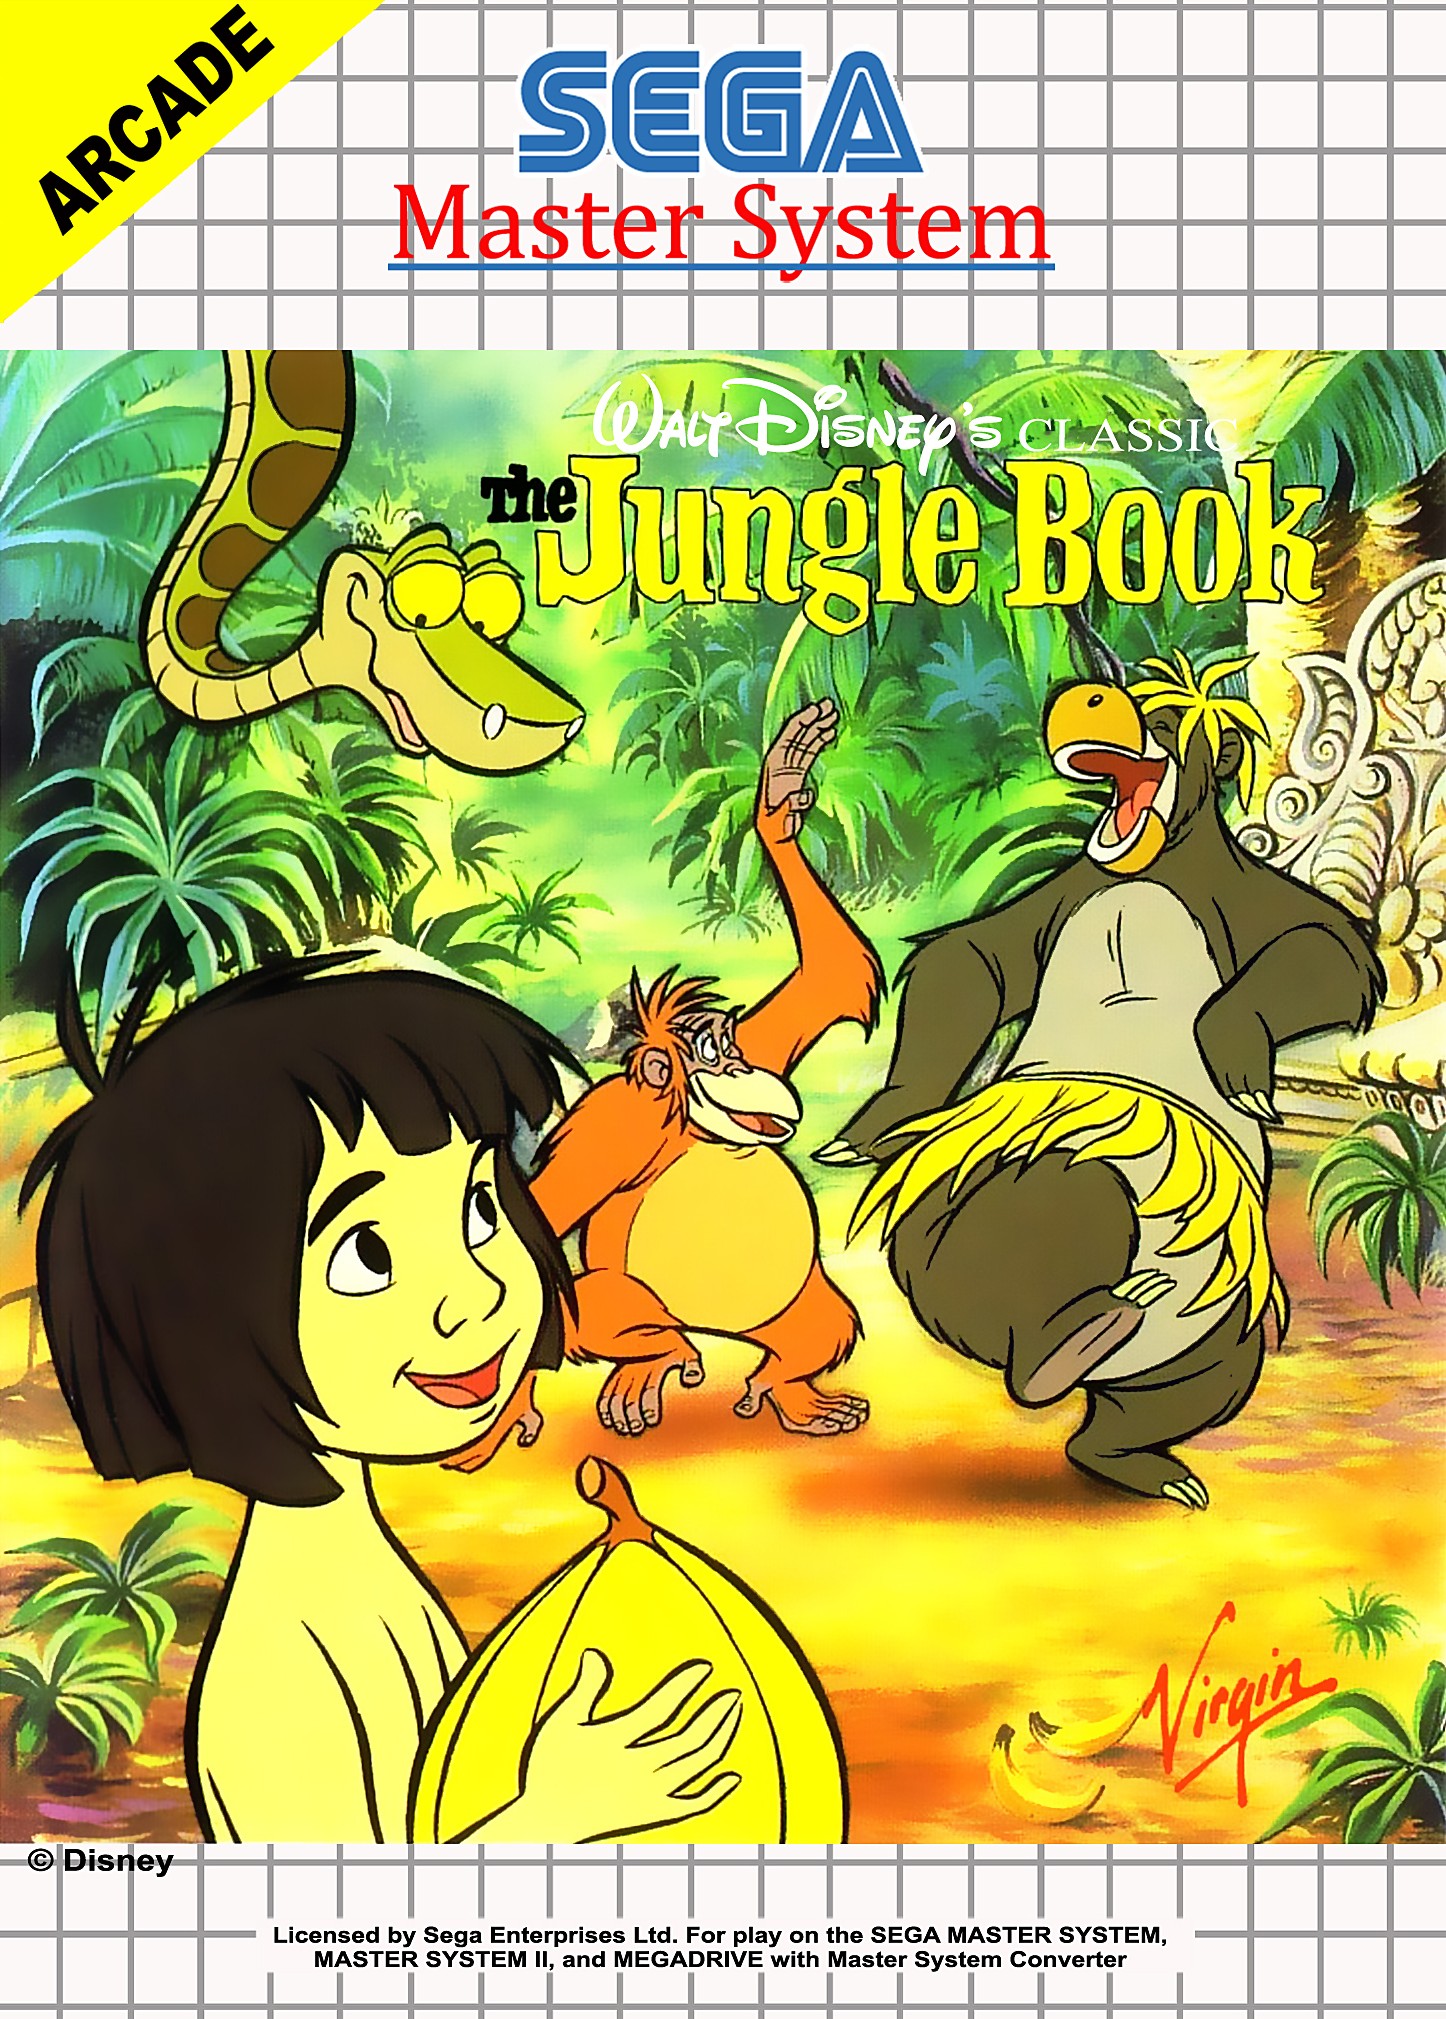 (Walt Disney's) The Jungle Book